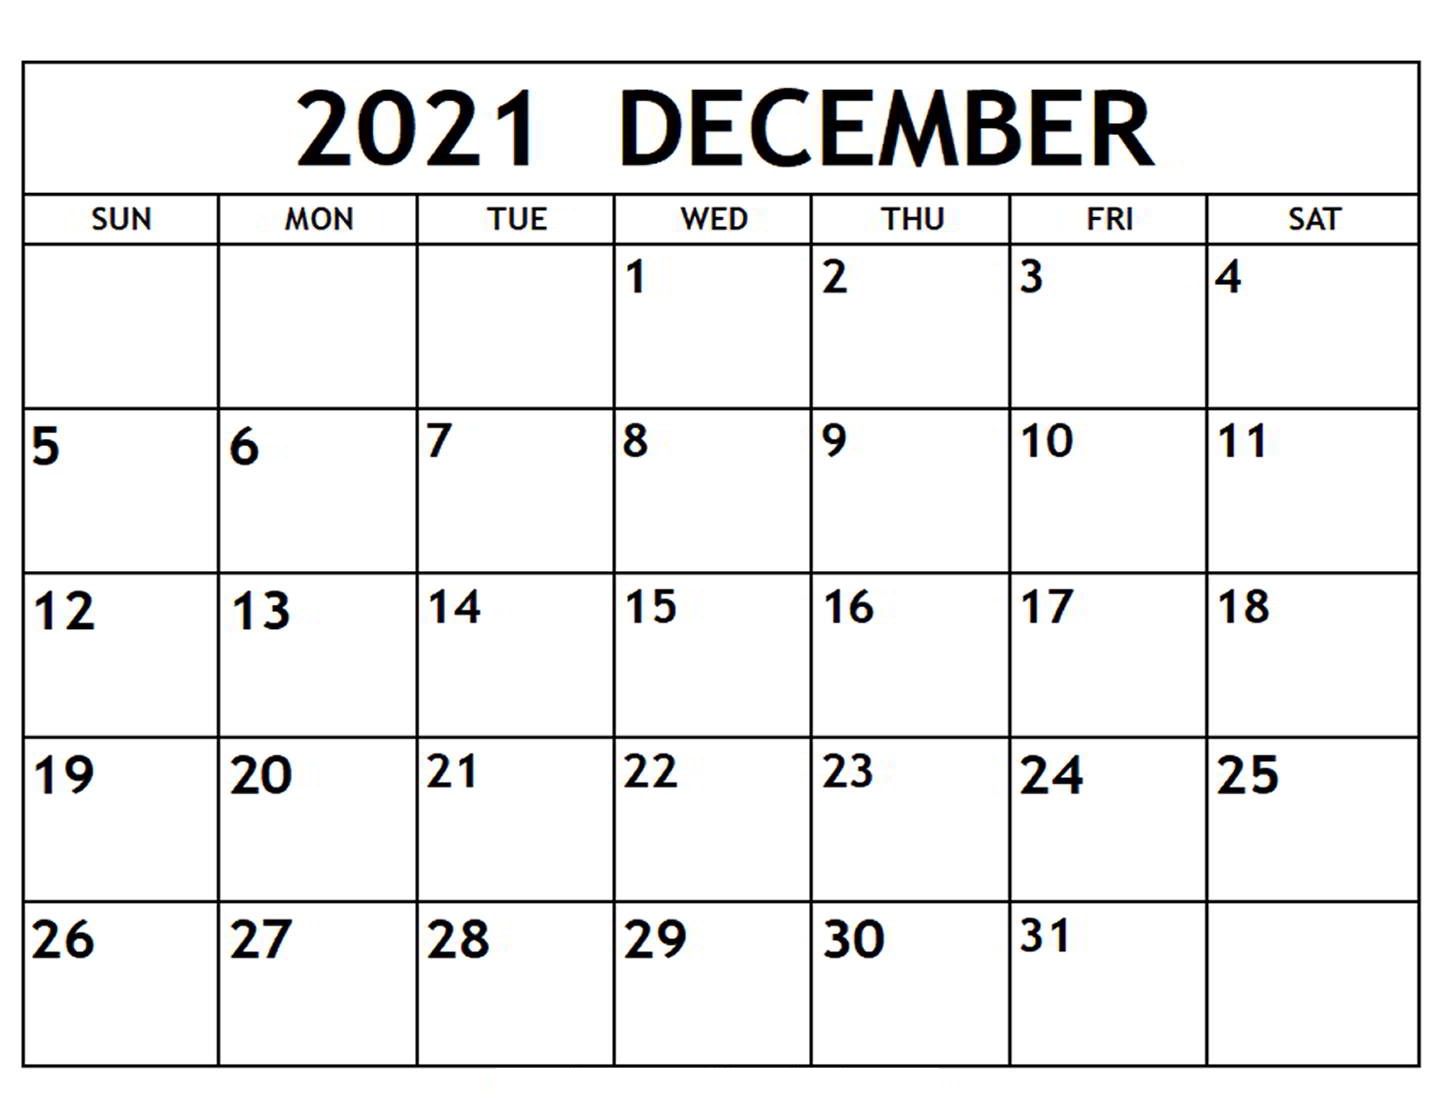 December 2021 Printable Calendar for Student Planner